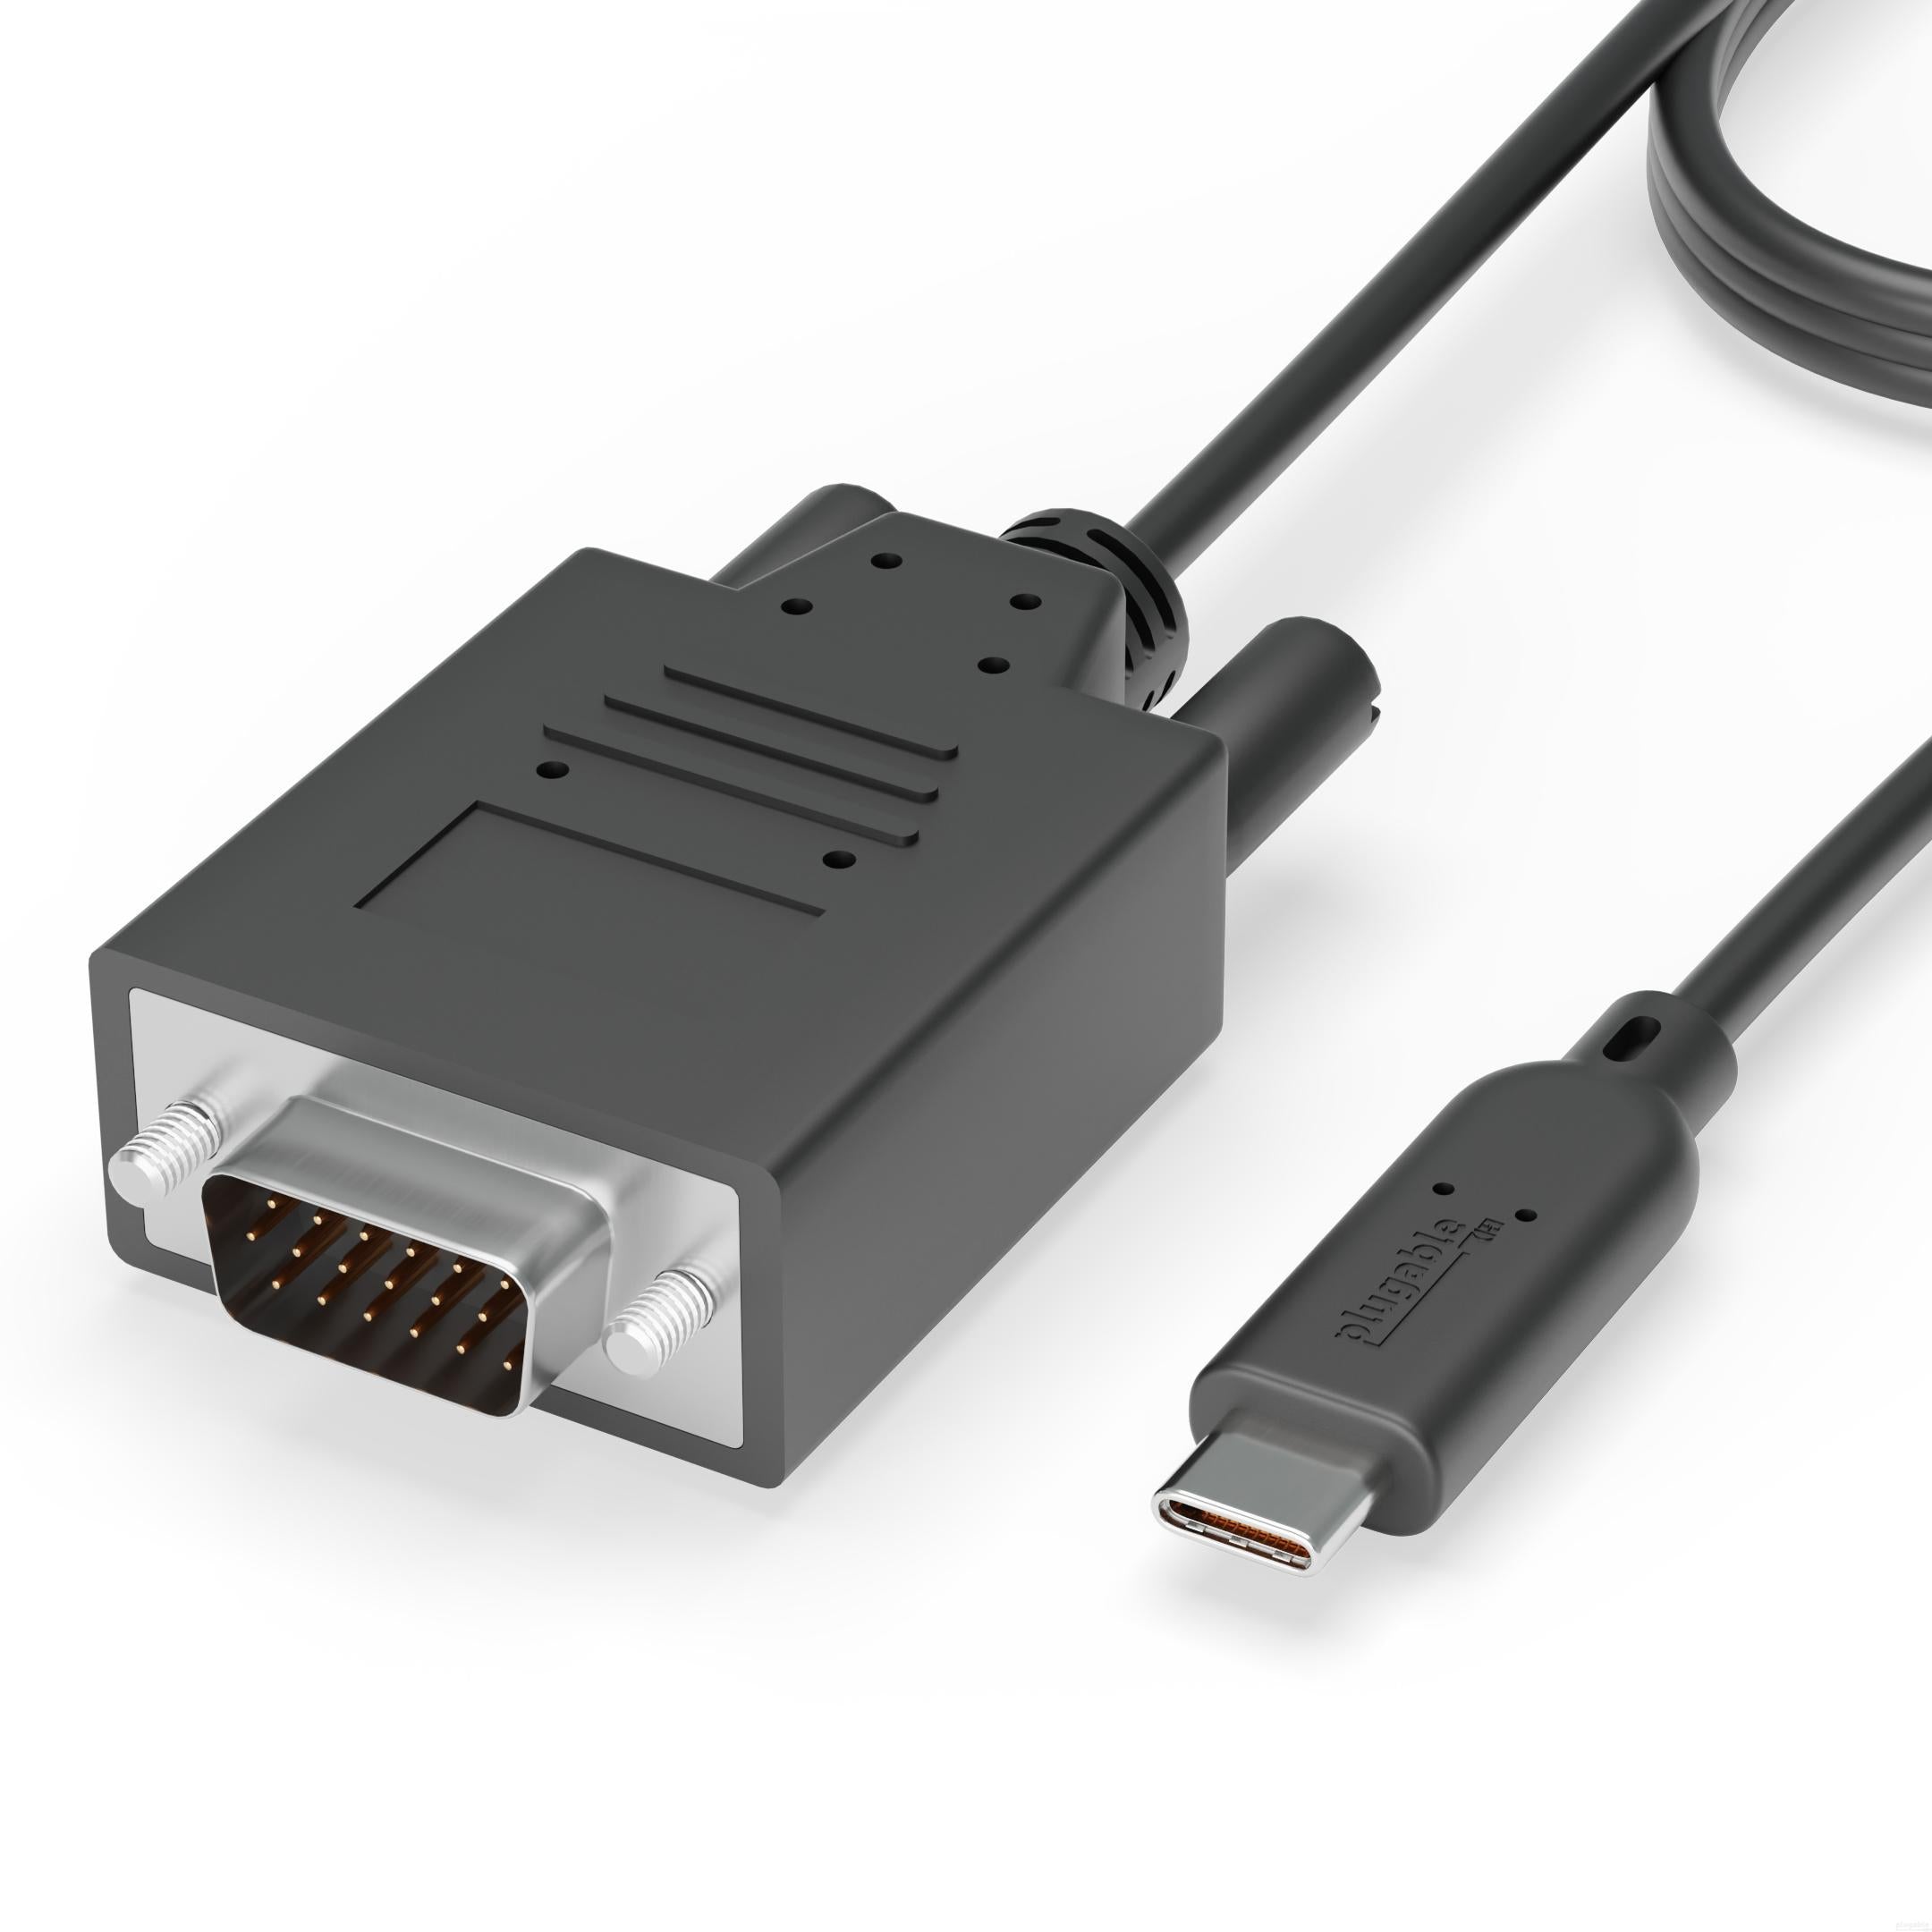 Plugable USB 3.1 Type-C to VGA Cable